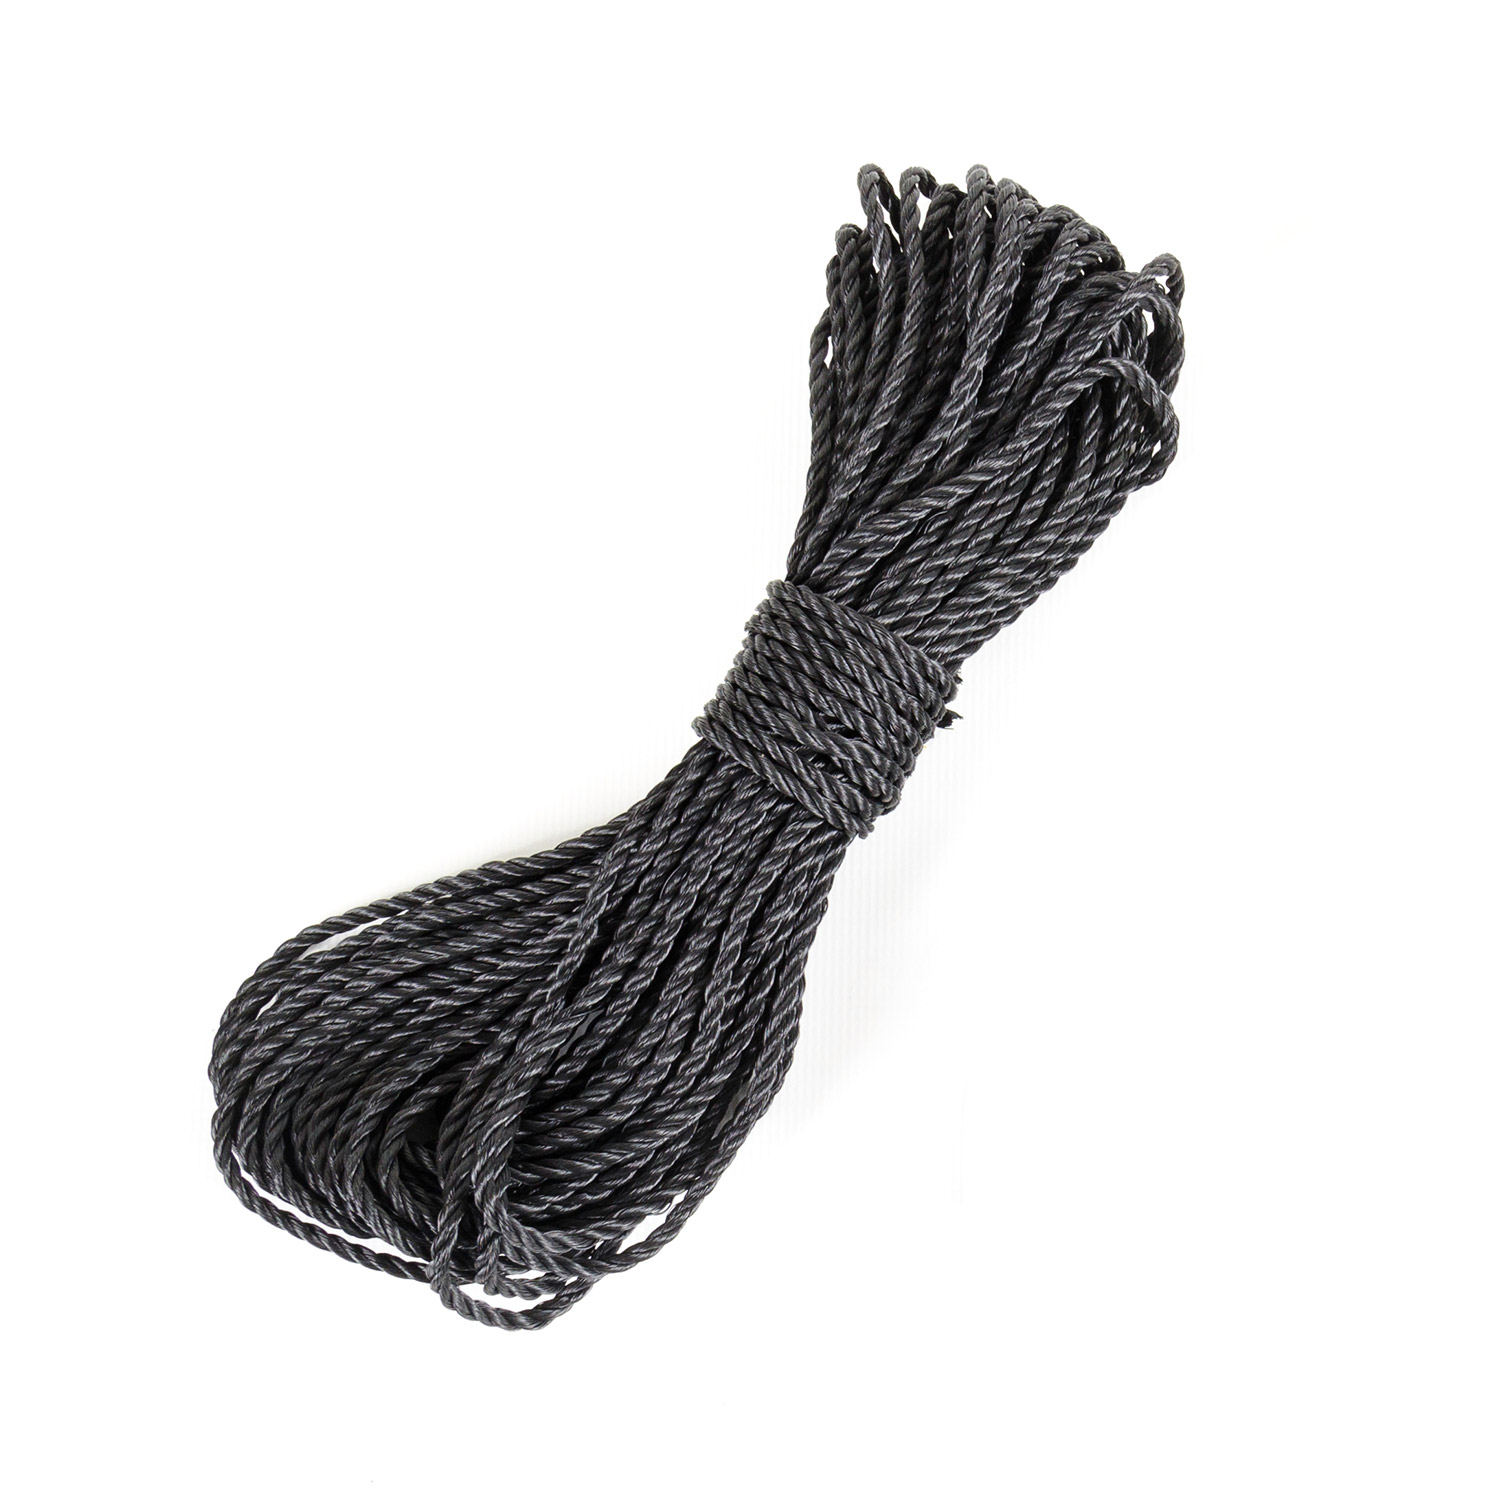 Cordinate Fabric Cord Cover Black, 6ft., 2pk – 48658